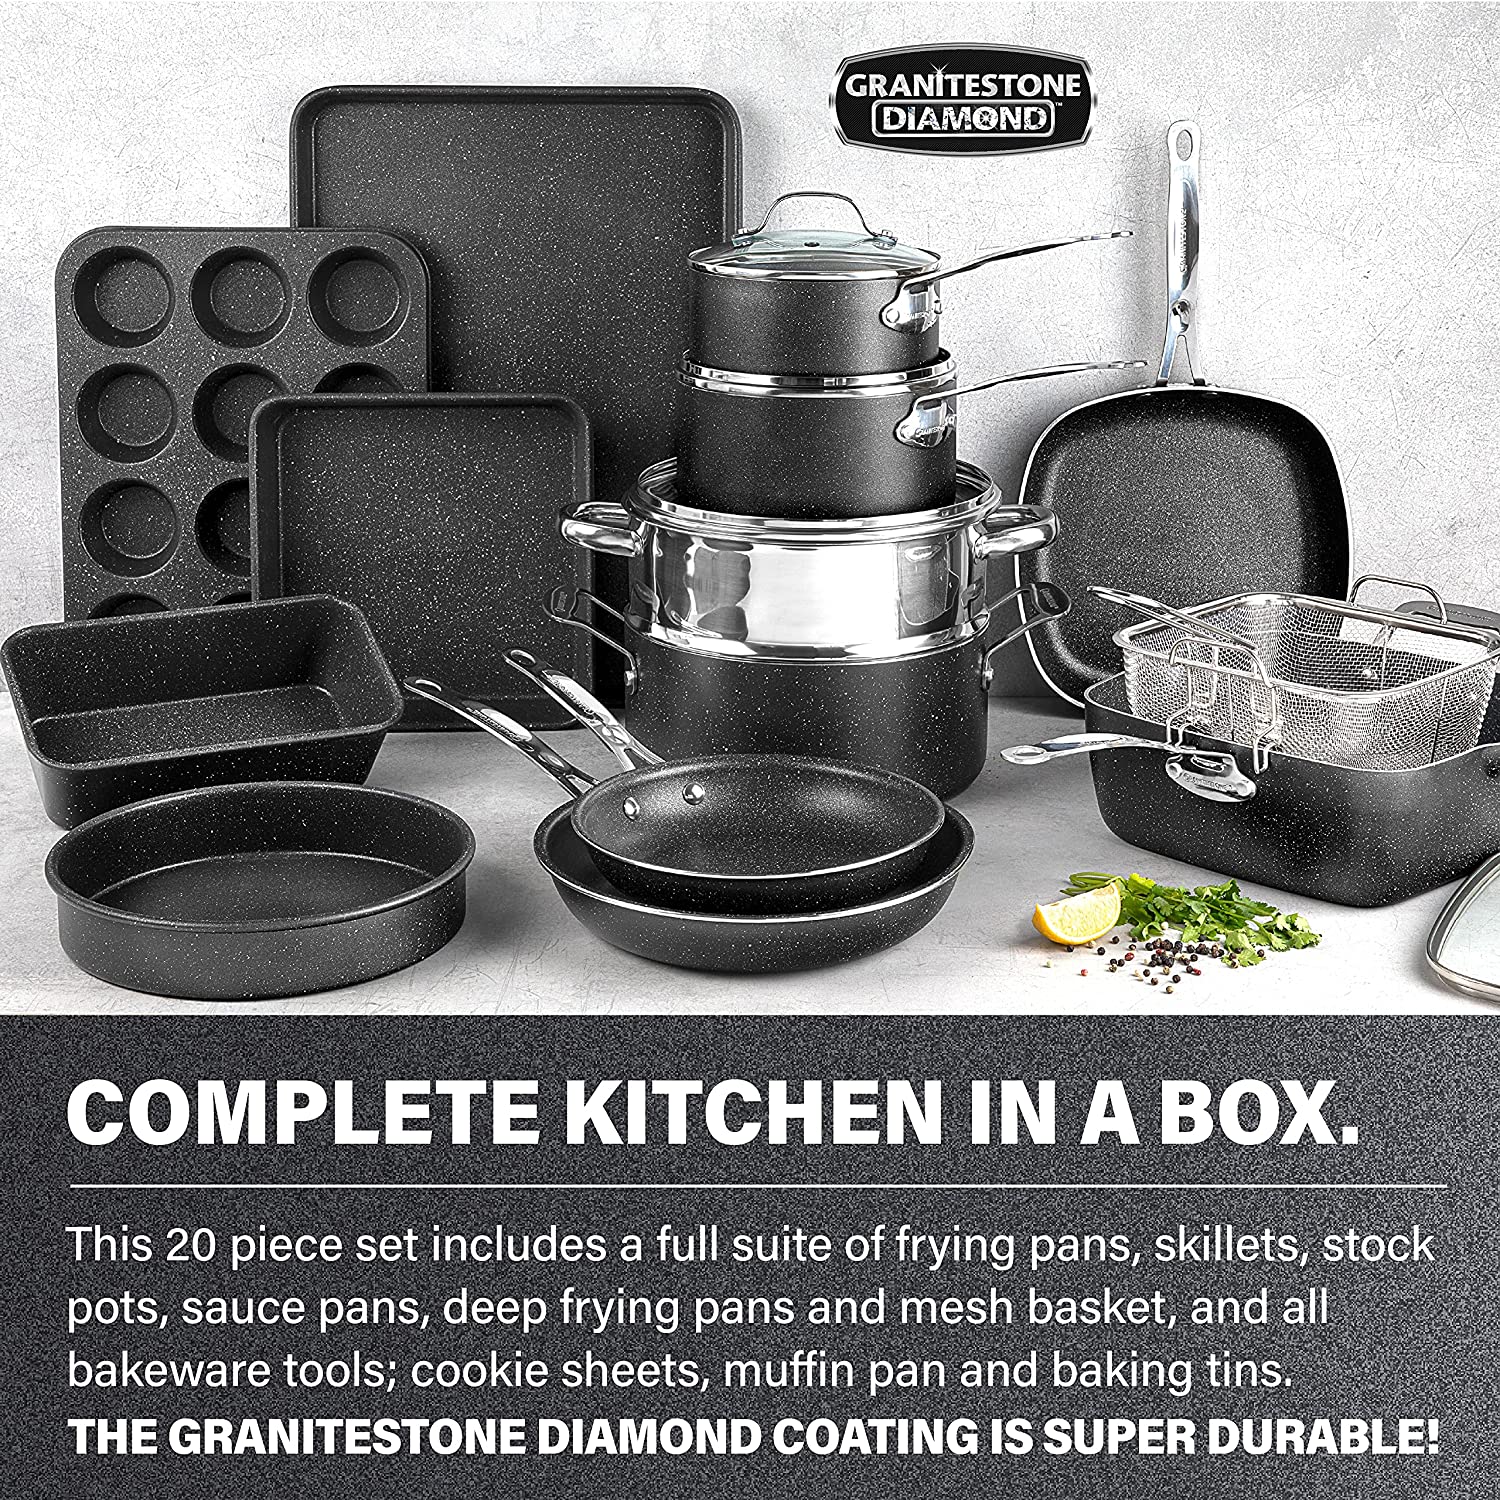 Granite Stone Diamond 5-Piece Non-Stick Cookware Set, Oven Safe, Dishwasher  Safe